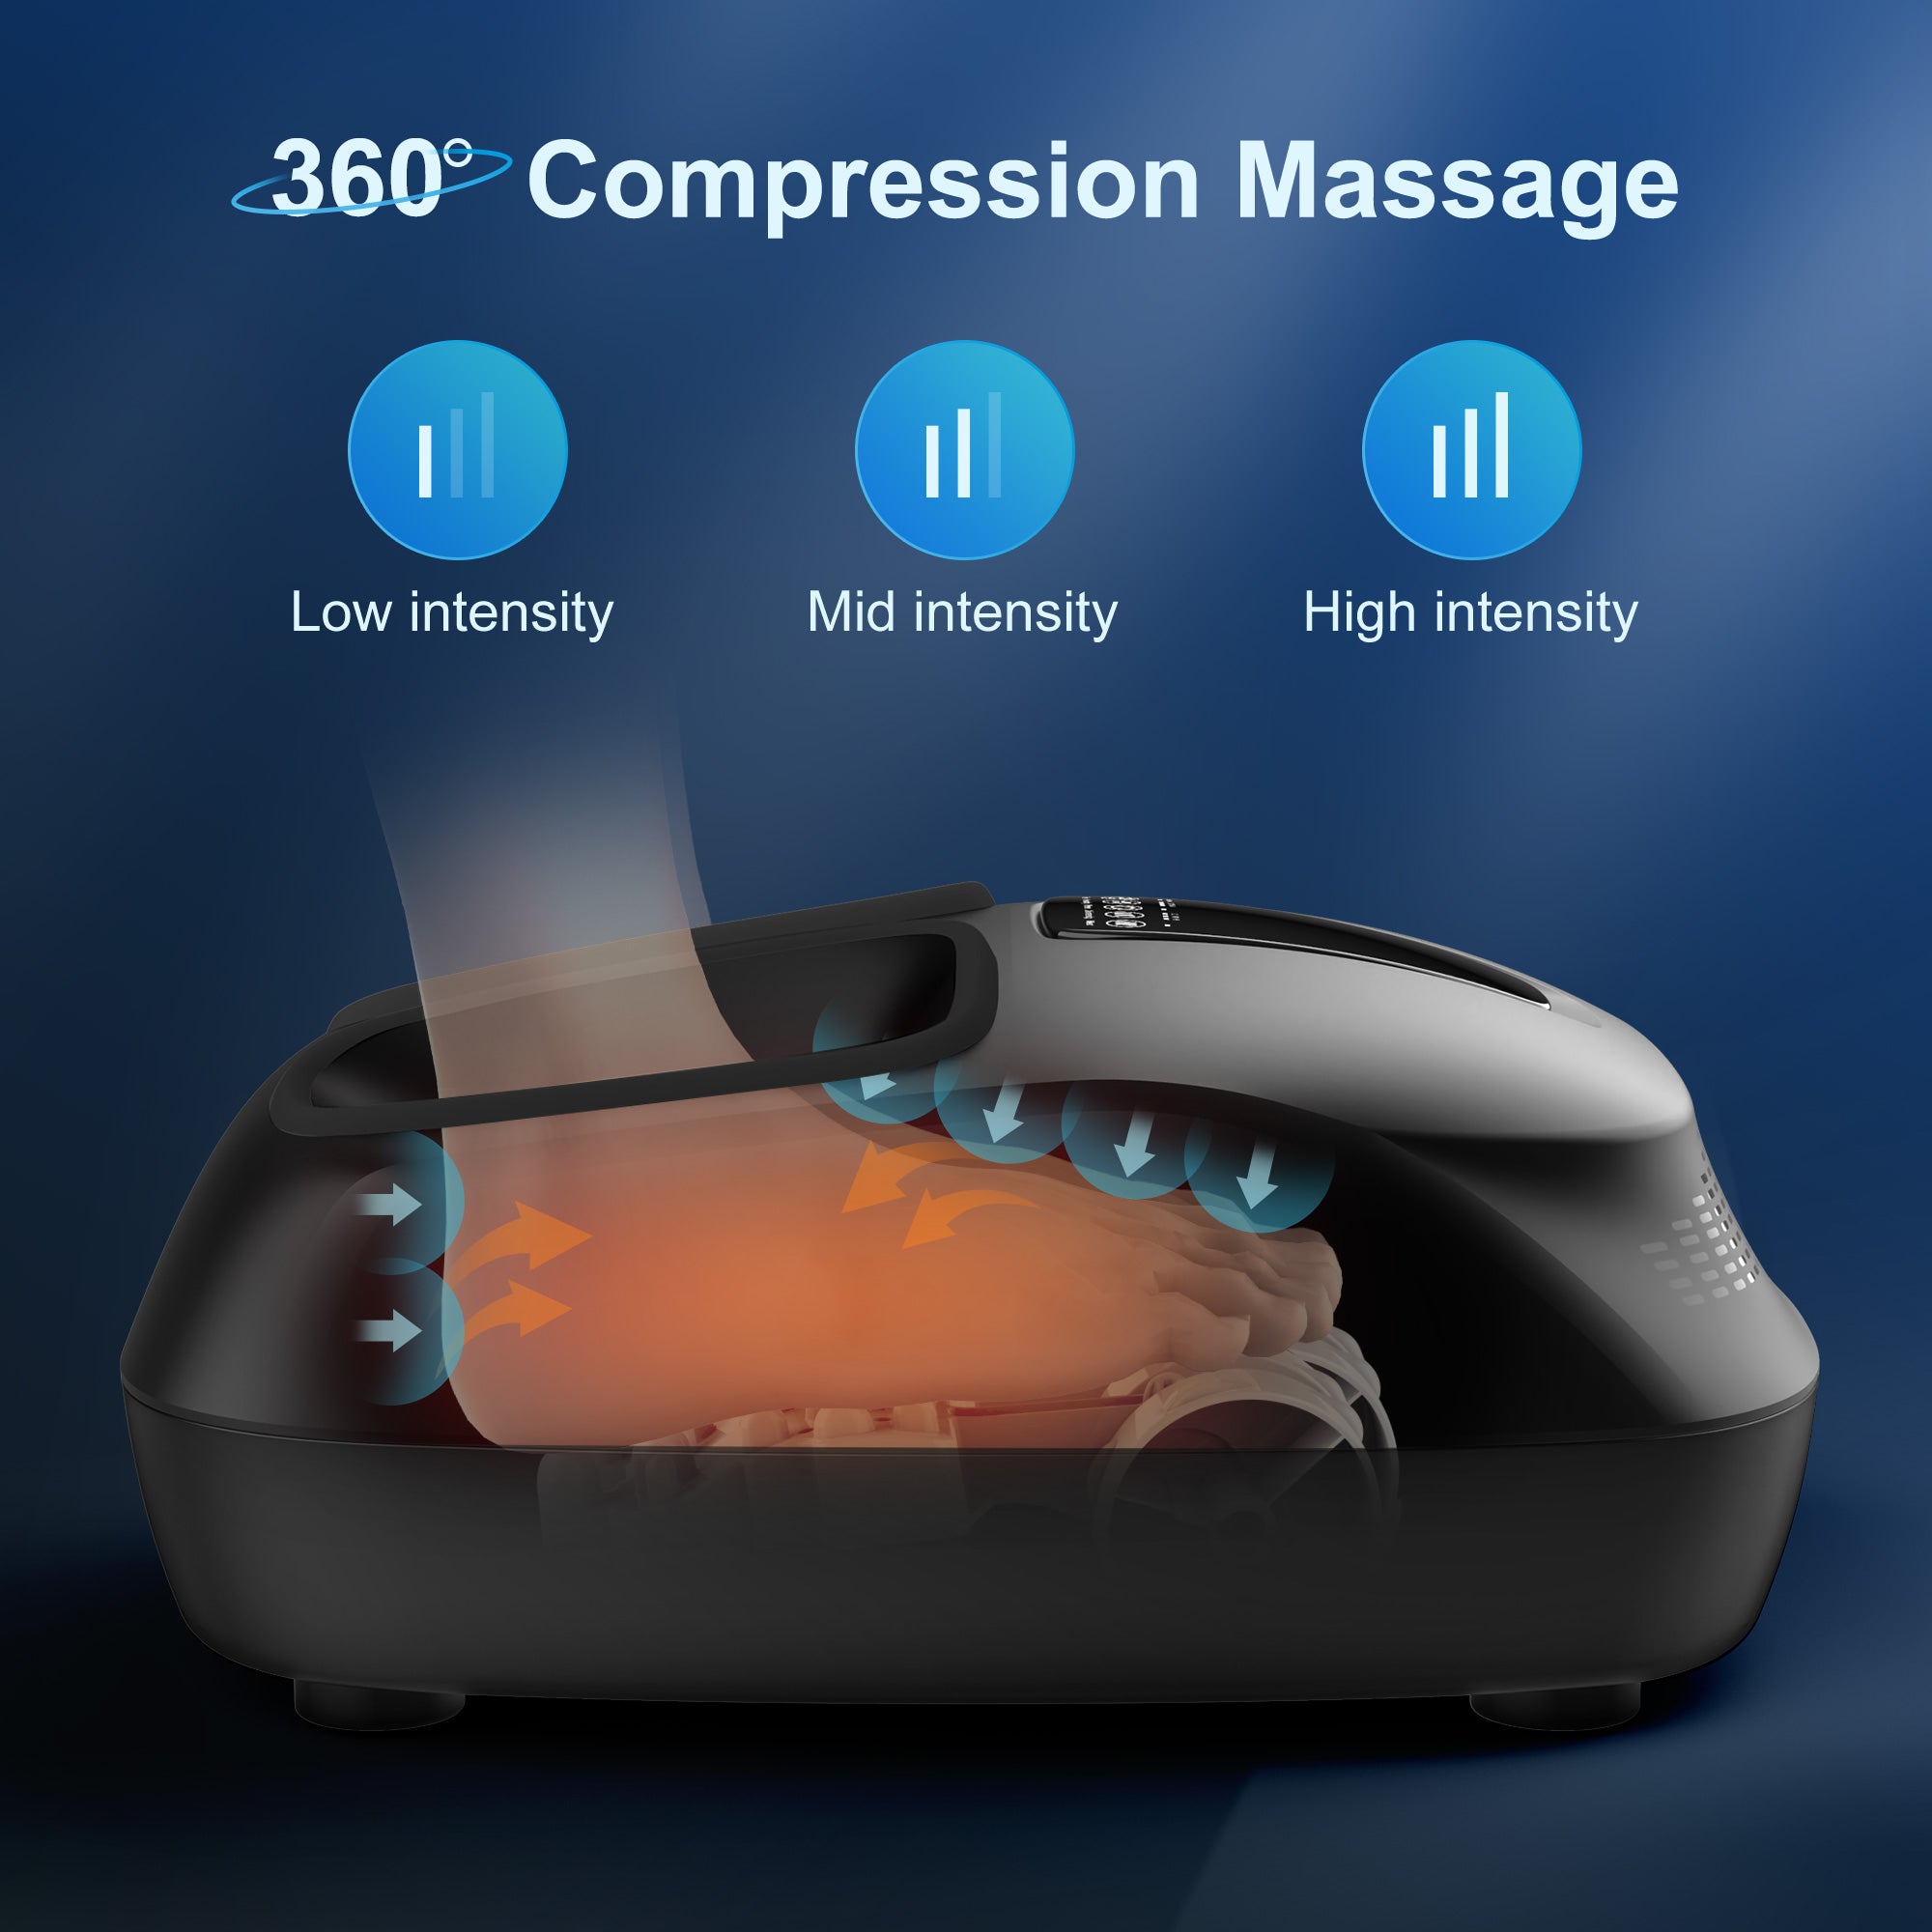 Shop Our Shiatsu Foot Massager On  - InvoSpa